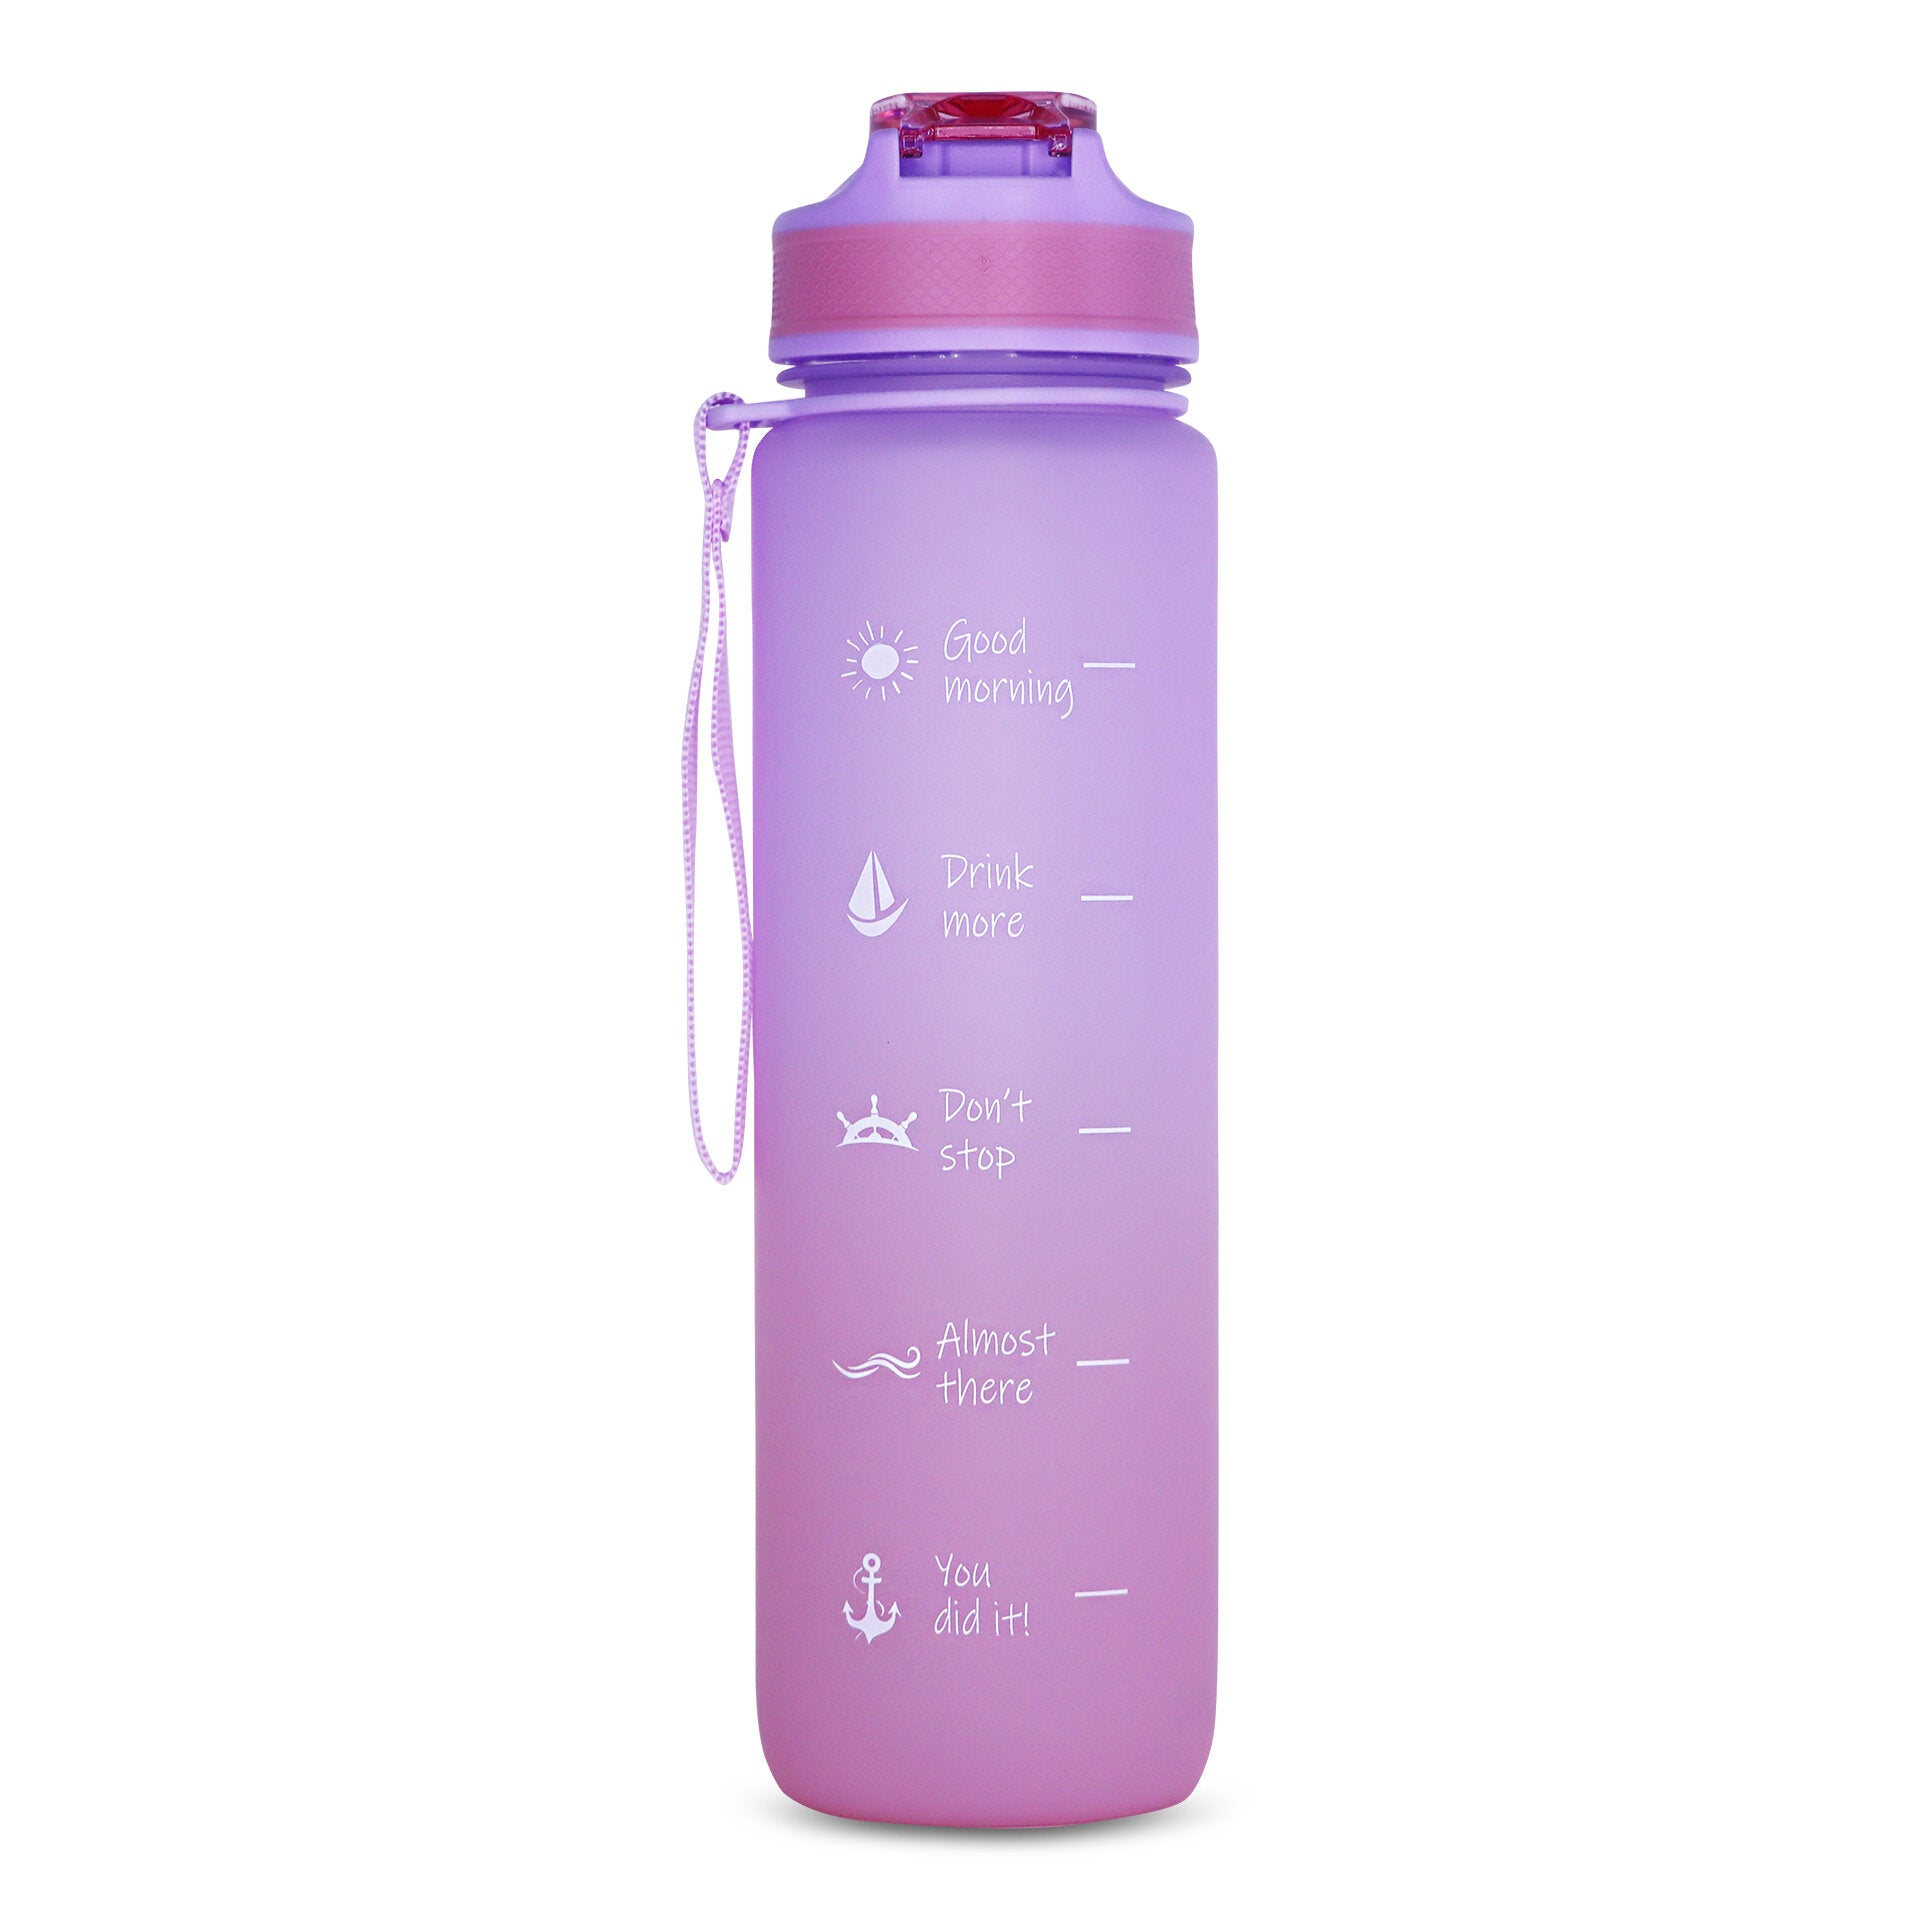 ANEMOSS Sailor Girl Tritan Water Bottle 1000 ml / 33.8 oz